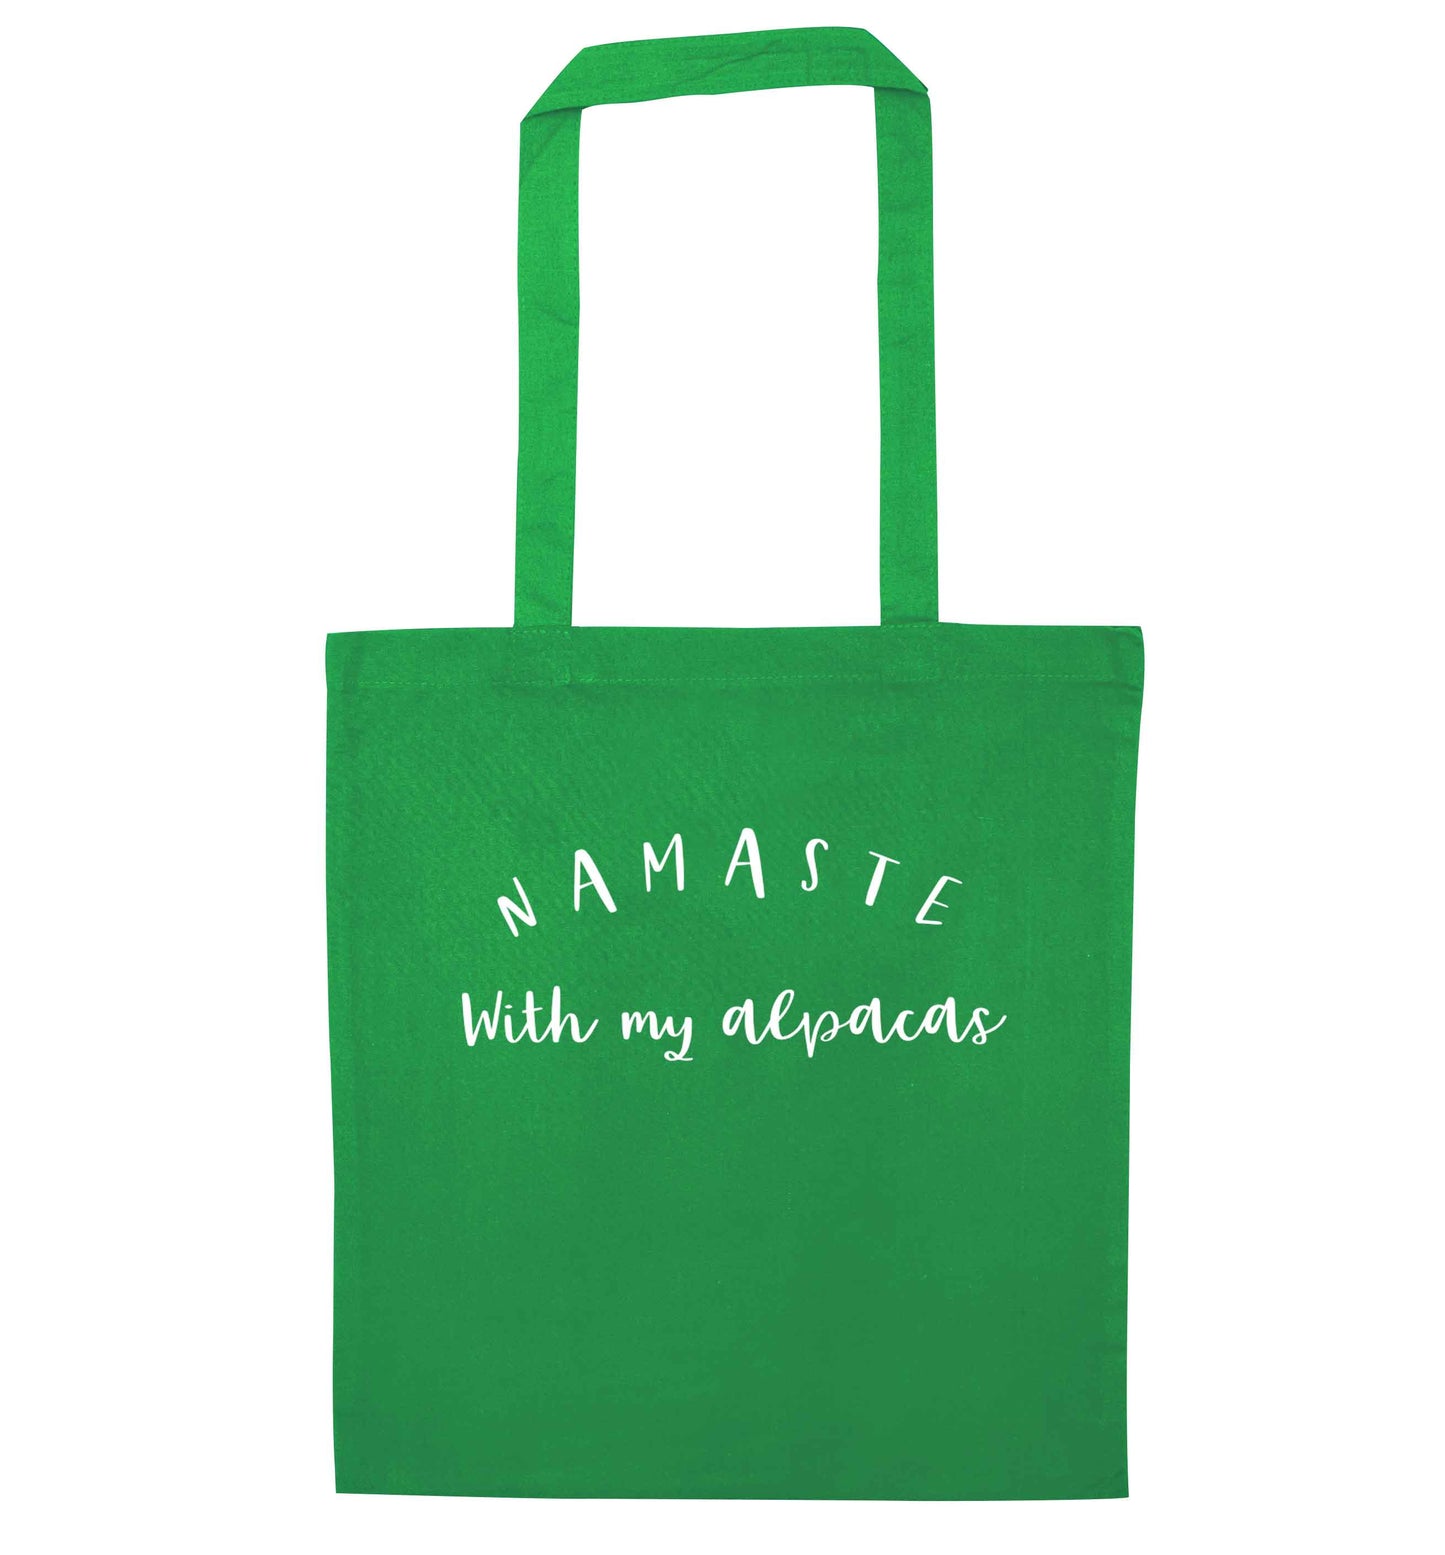 Namaste with my alpacas green tote bag